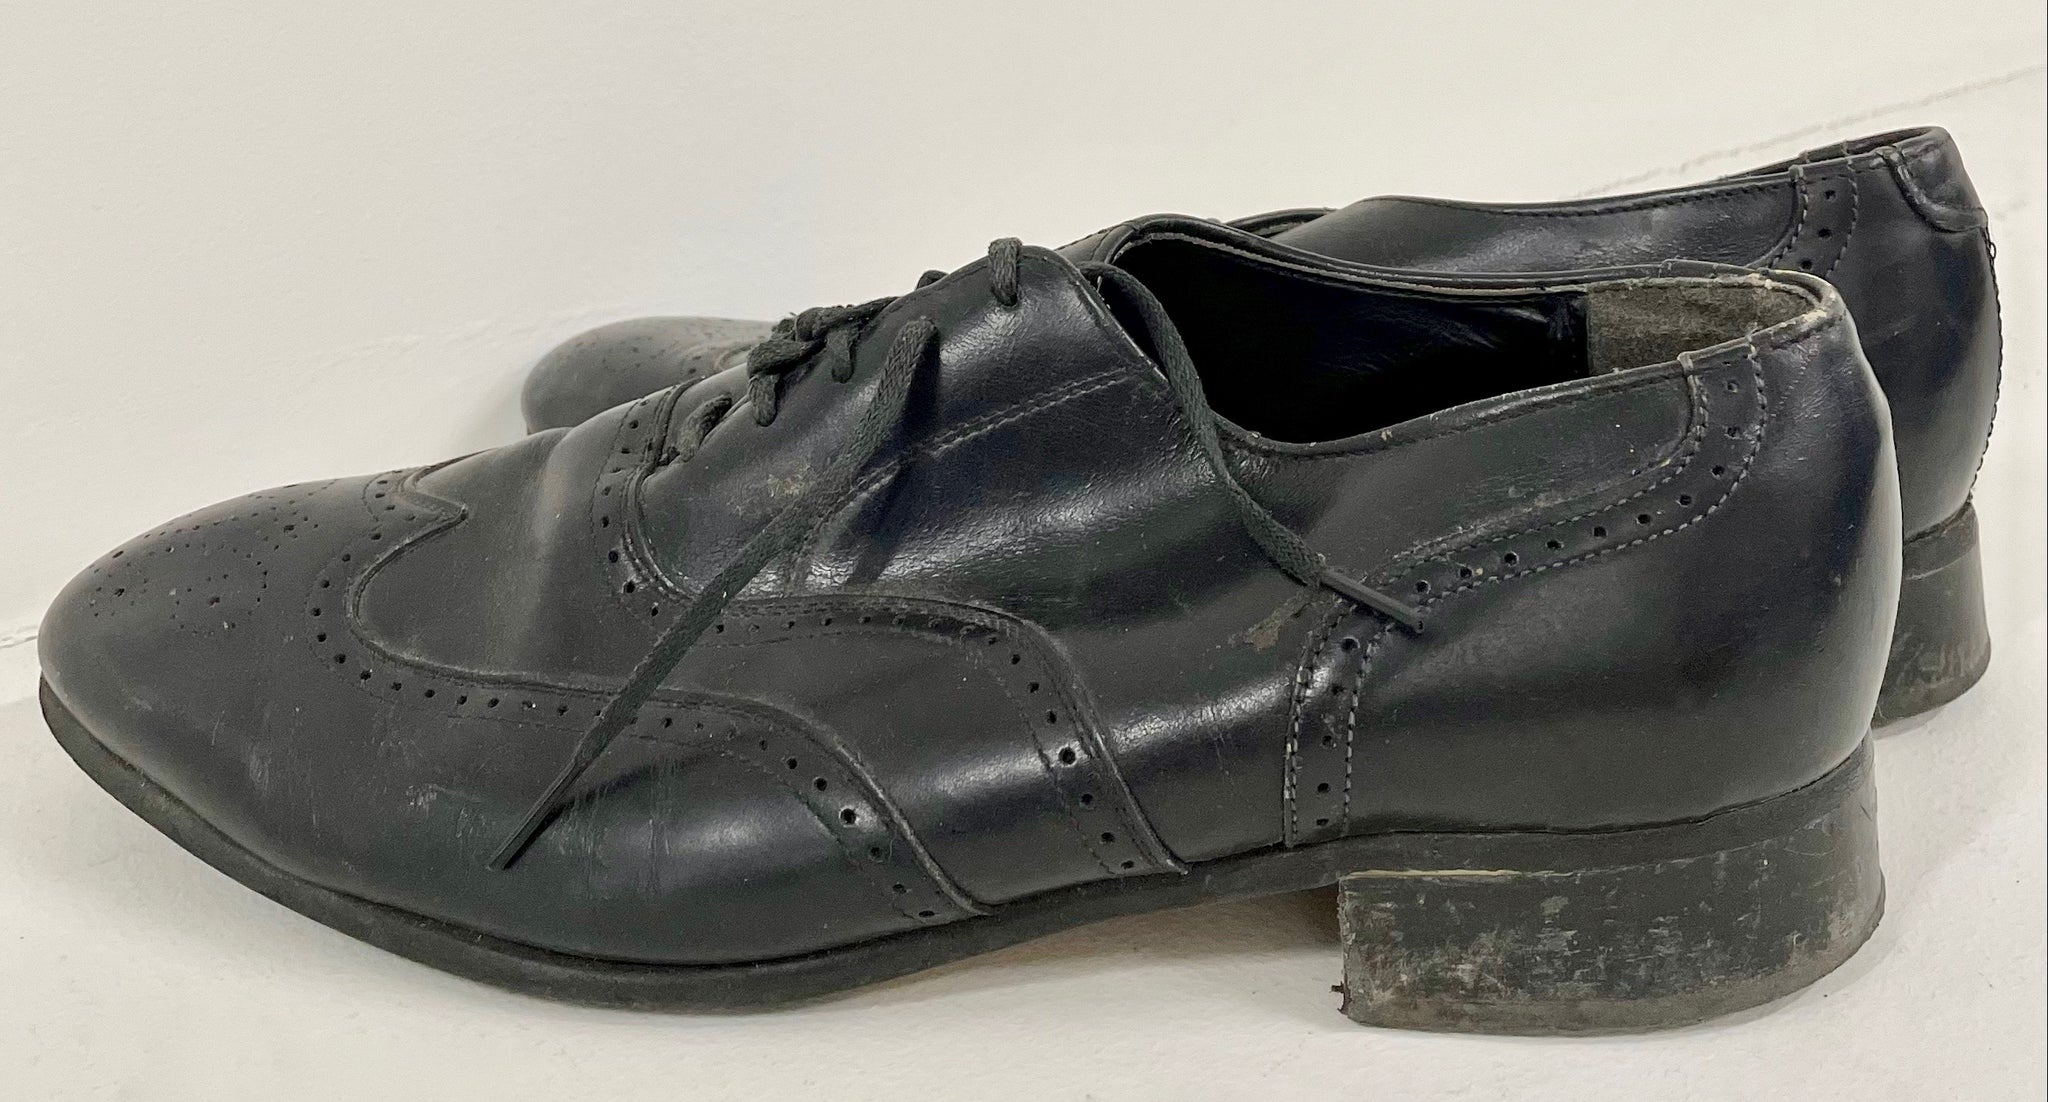 Baker, Chet. (1929 - 1988) Black Leather Dress Shoes, ca. 1980